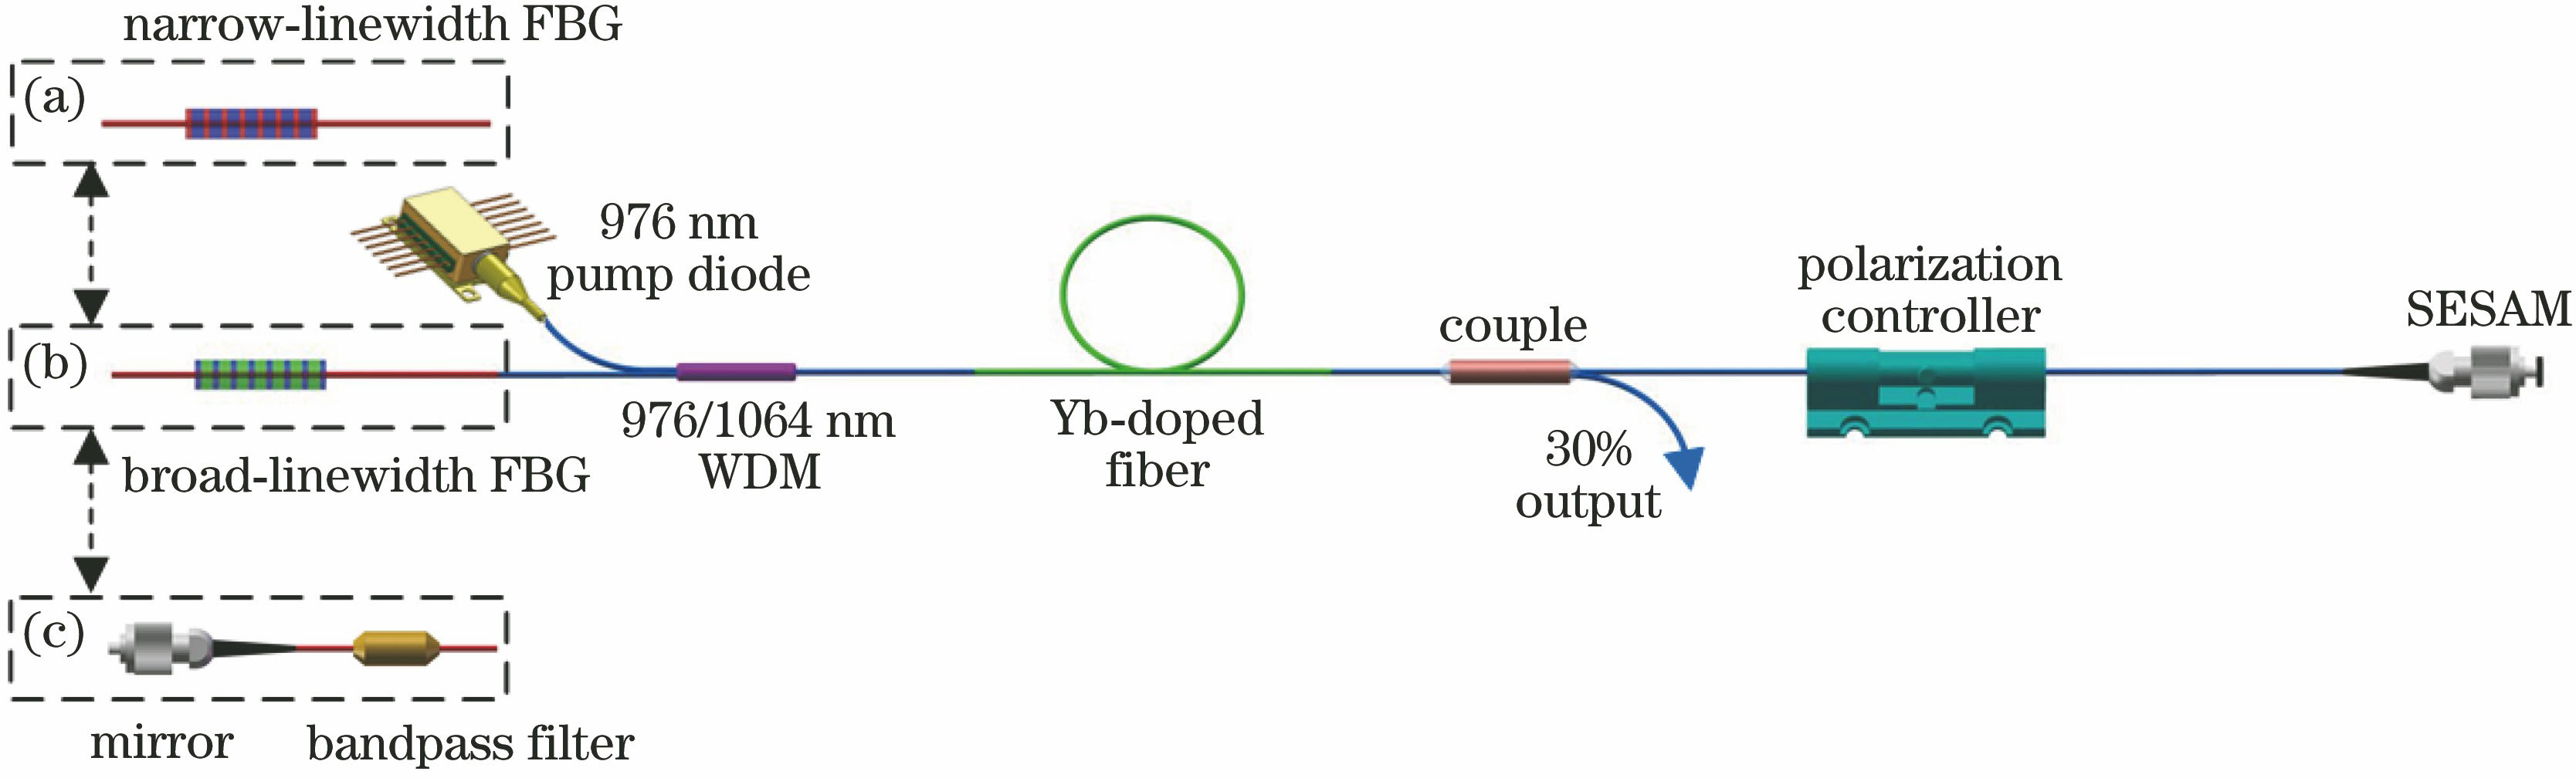 Diagram of experimental setup. (a) Filter cavity with narrow-bandwidth (0.2 nm); (b) filter cavity with moderate-bandwidth (1.0 or 1.2 nm); (c) filter cavity with broad-bandwidth (2.3 nm)